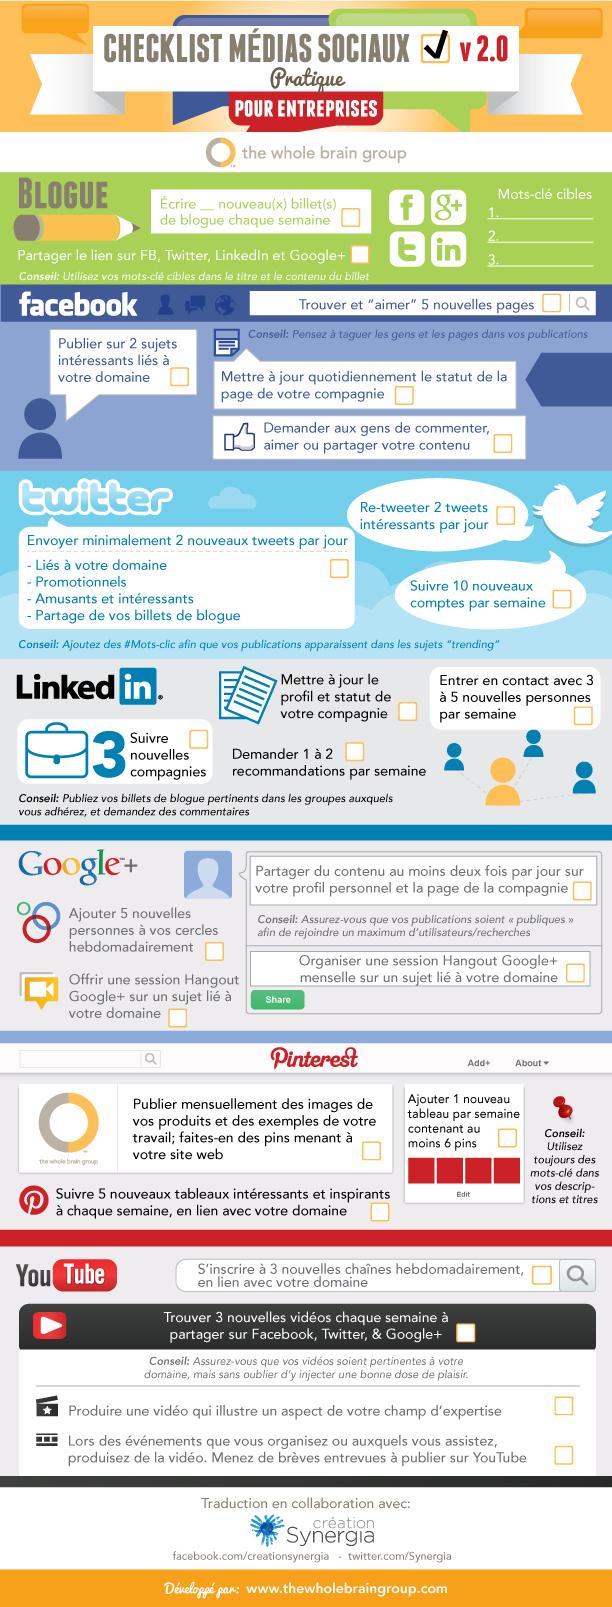 SocialMediaChecklist French Translation Sensible Social Media Checklist v2.0 now available en Français!